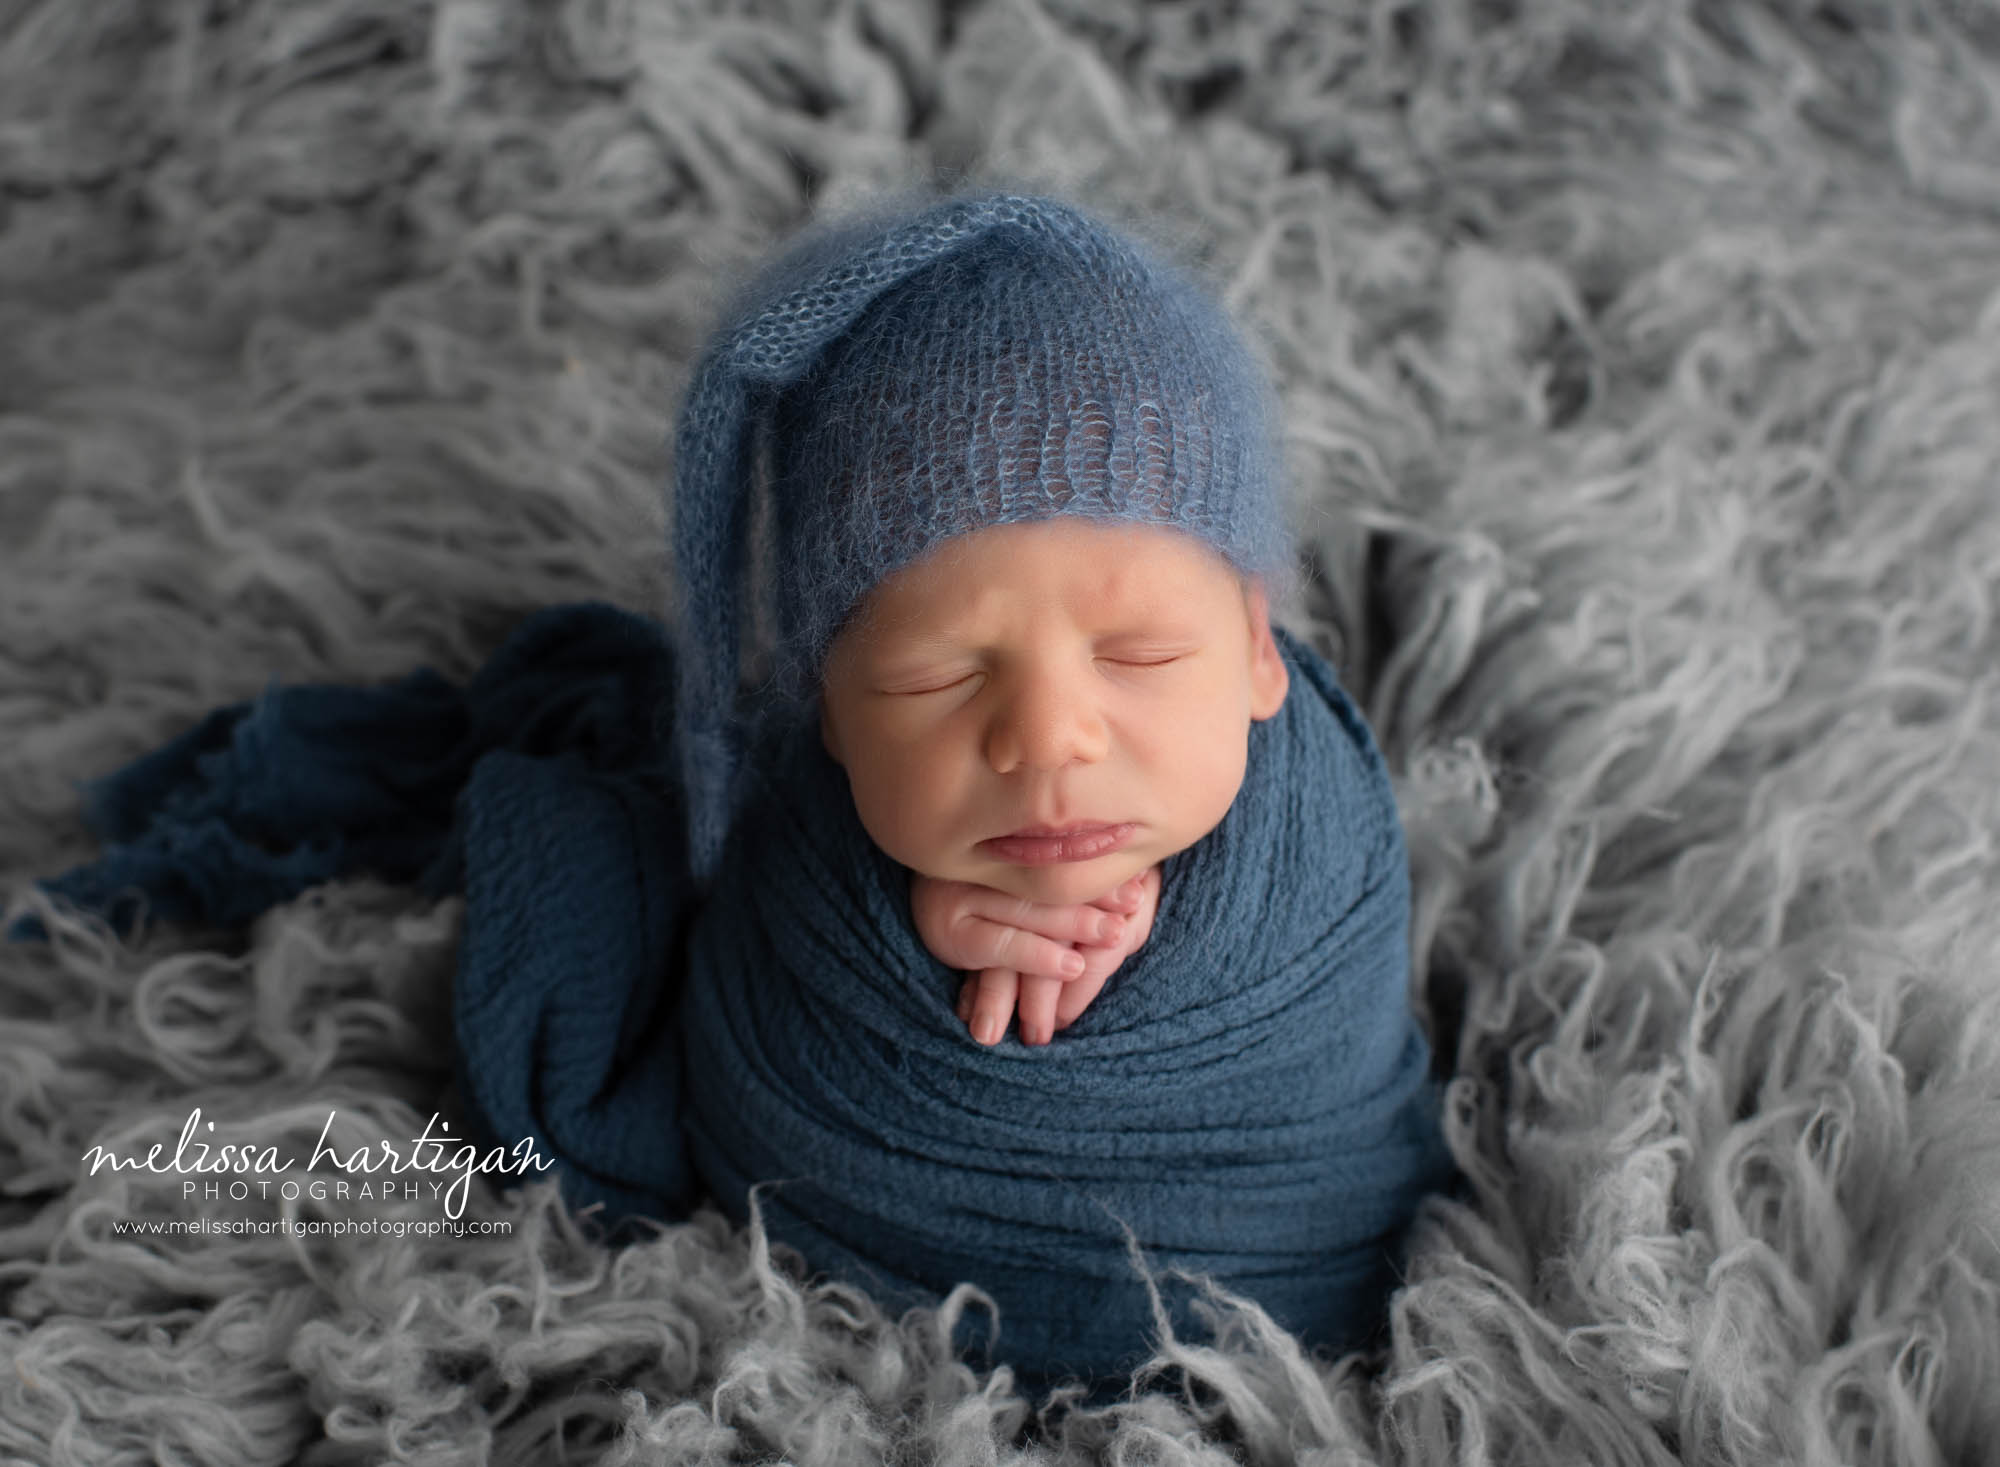 Baby boy wrapped inblue wrap wearing knitted sleepy cap